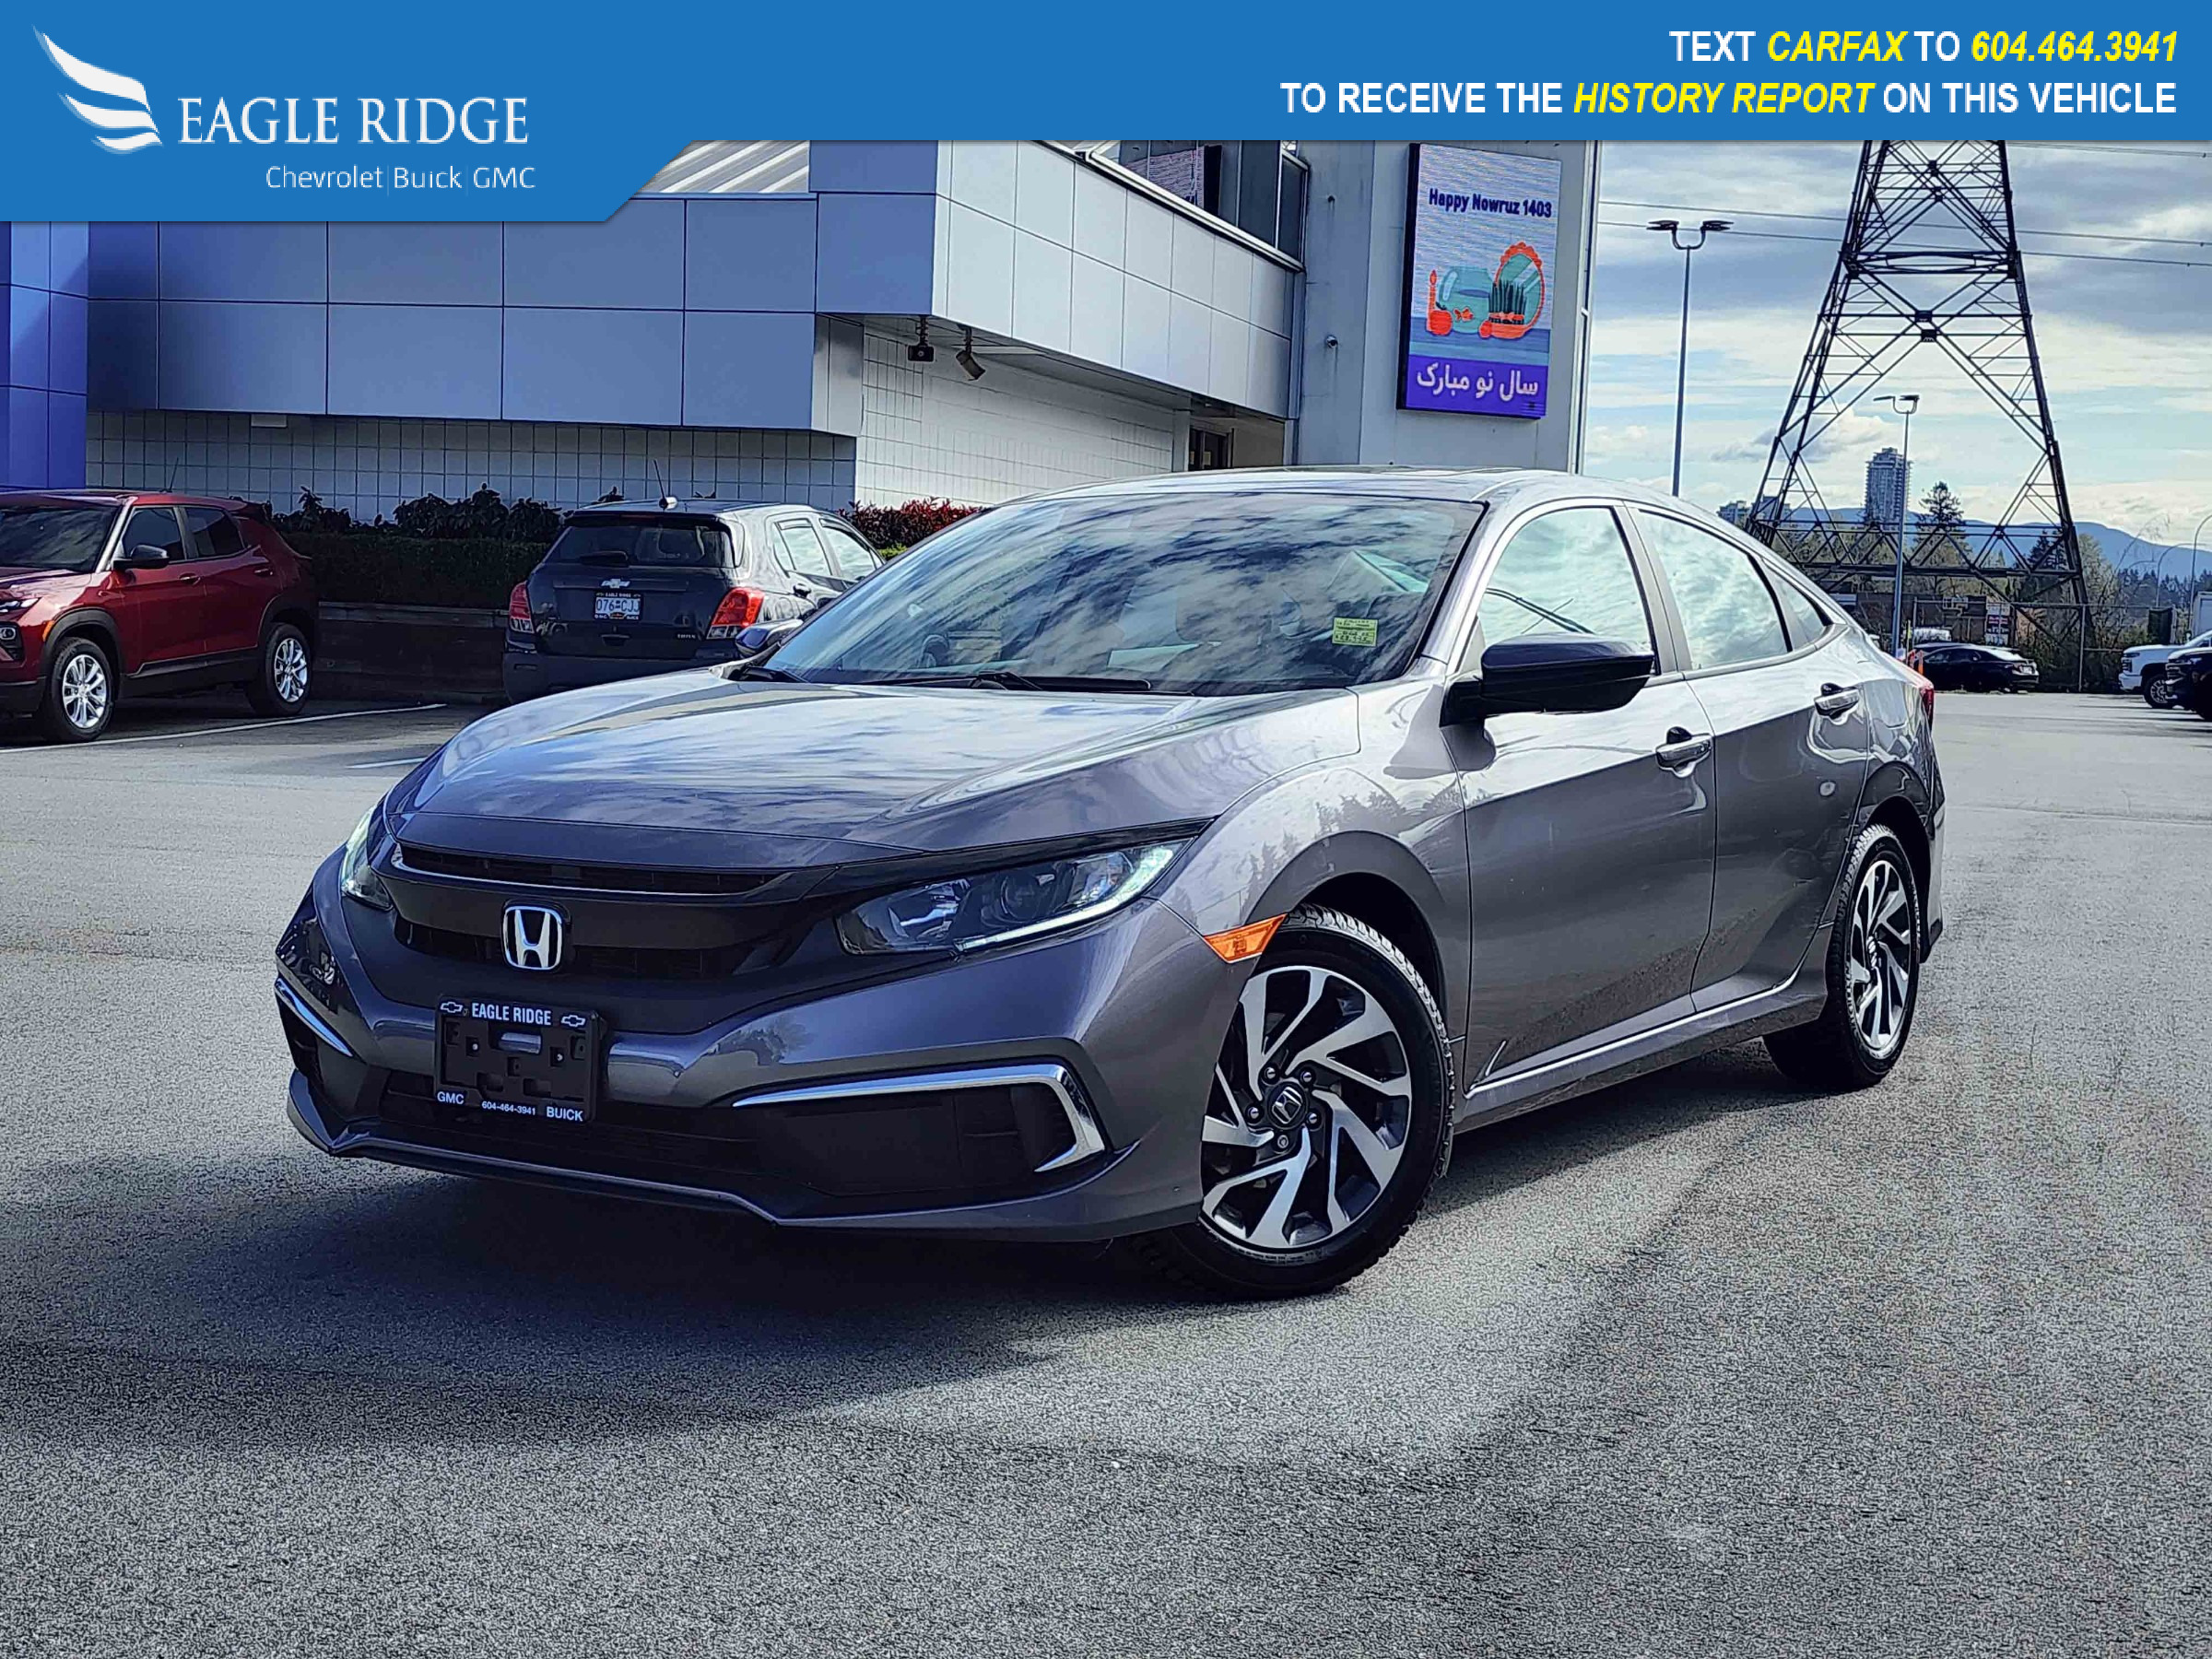 2020 Honda Civic EX Lane Keeping Assist System, Power driver seat, 